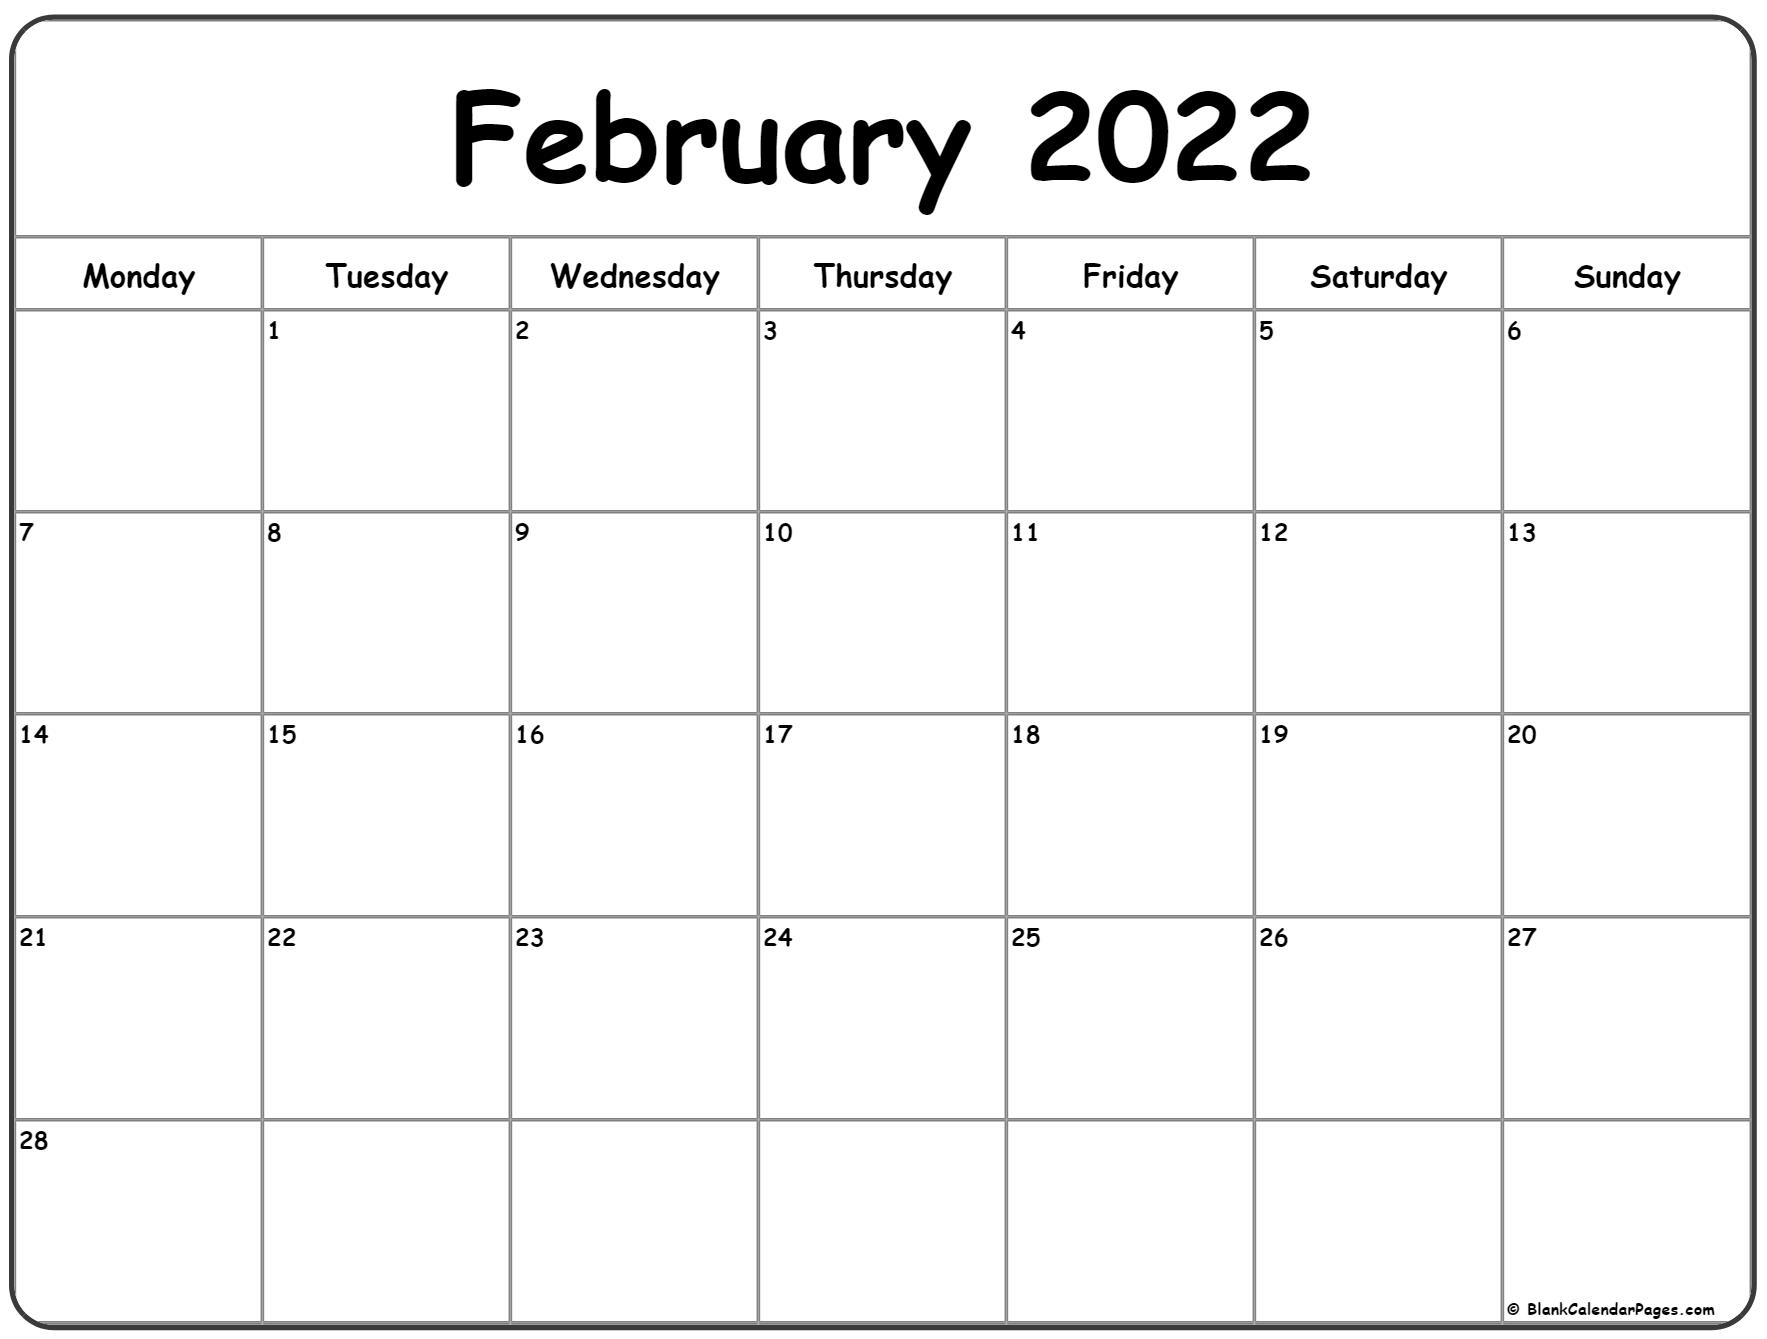 February 2022 Monday Calendar | Monday To Sunday